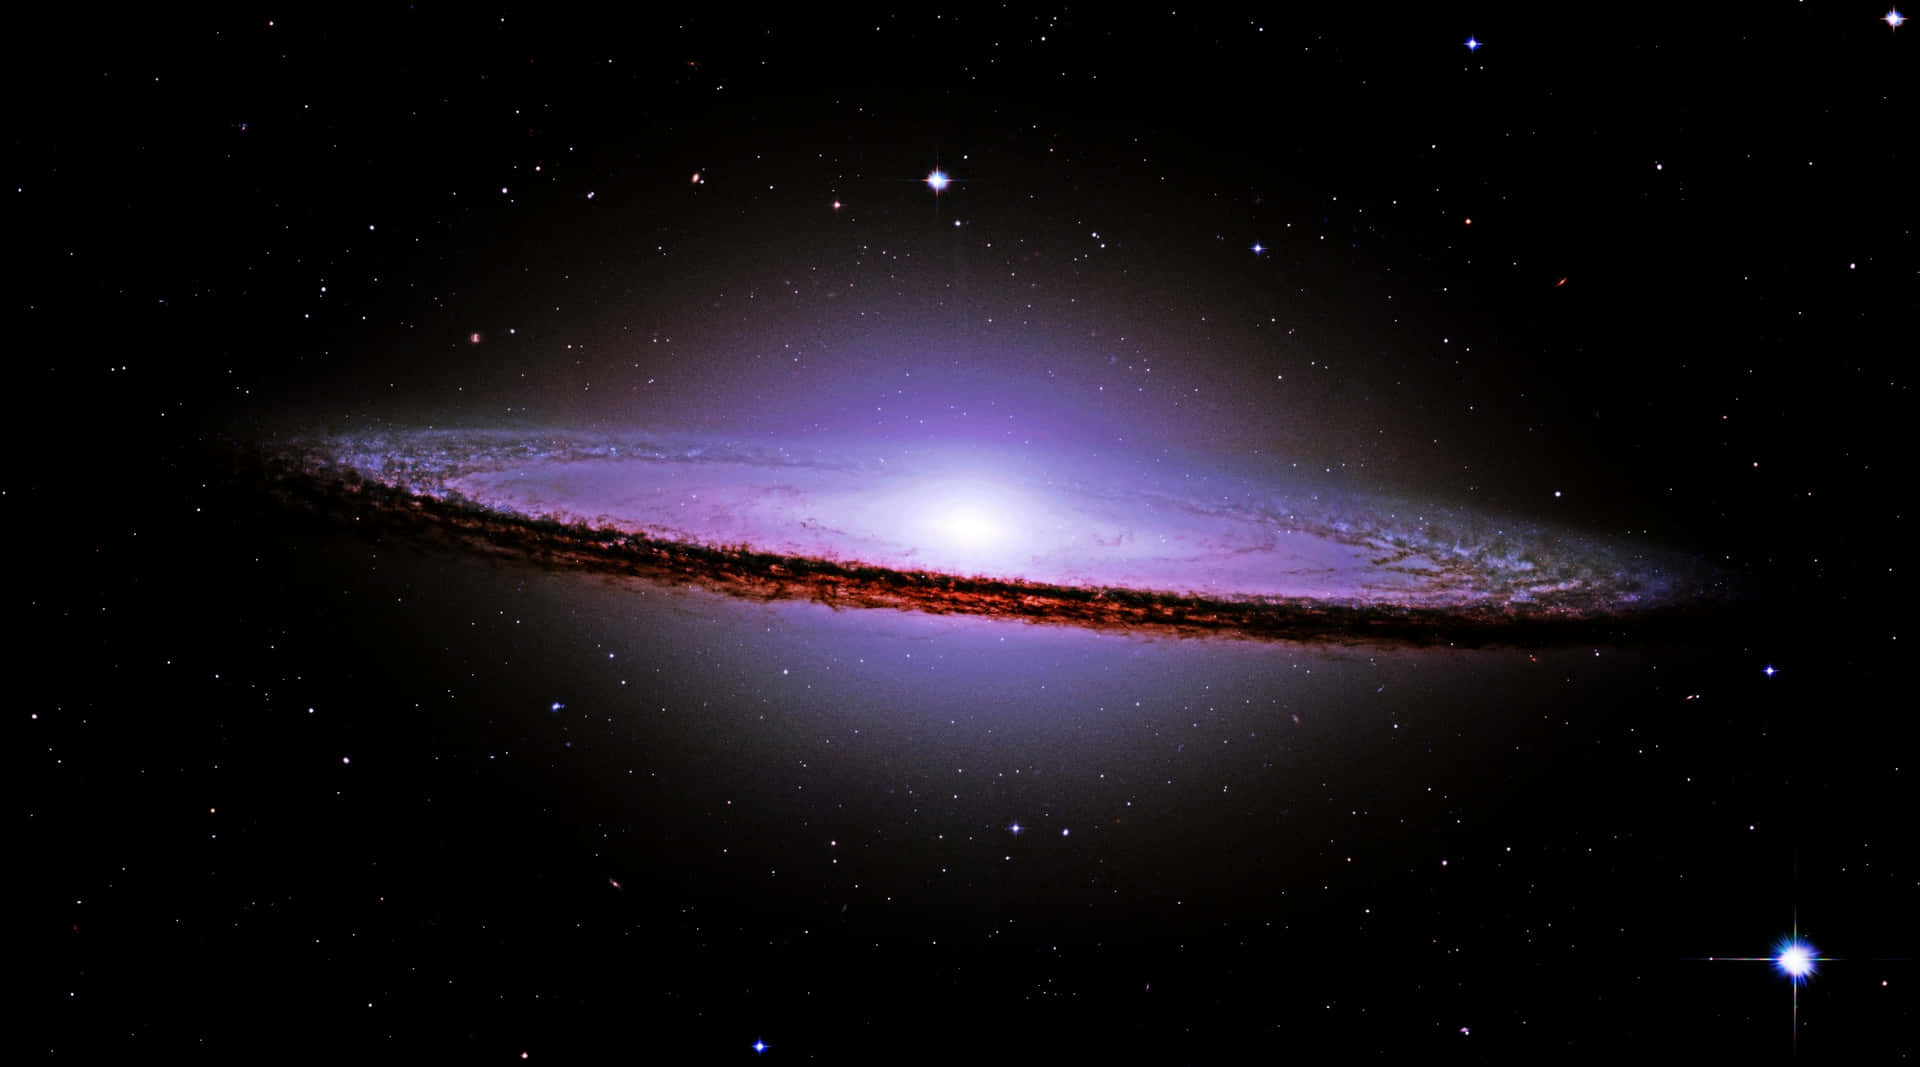 A Vast Galaxy Seen From Earth Through the Eyes of Nasa